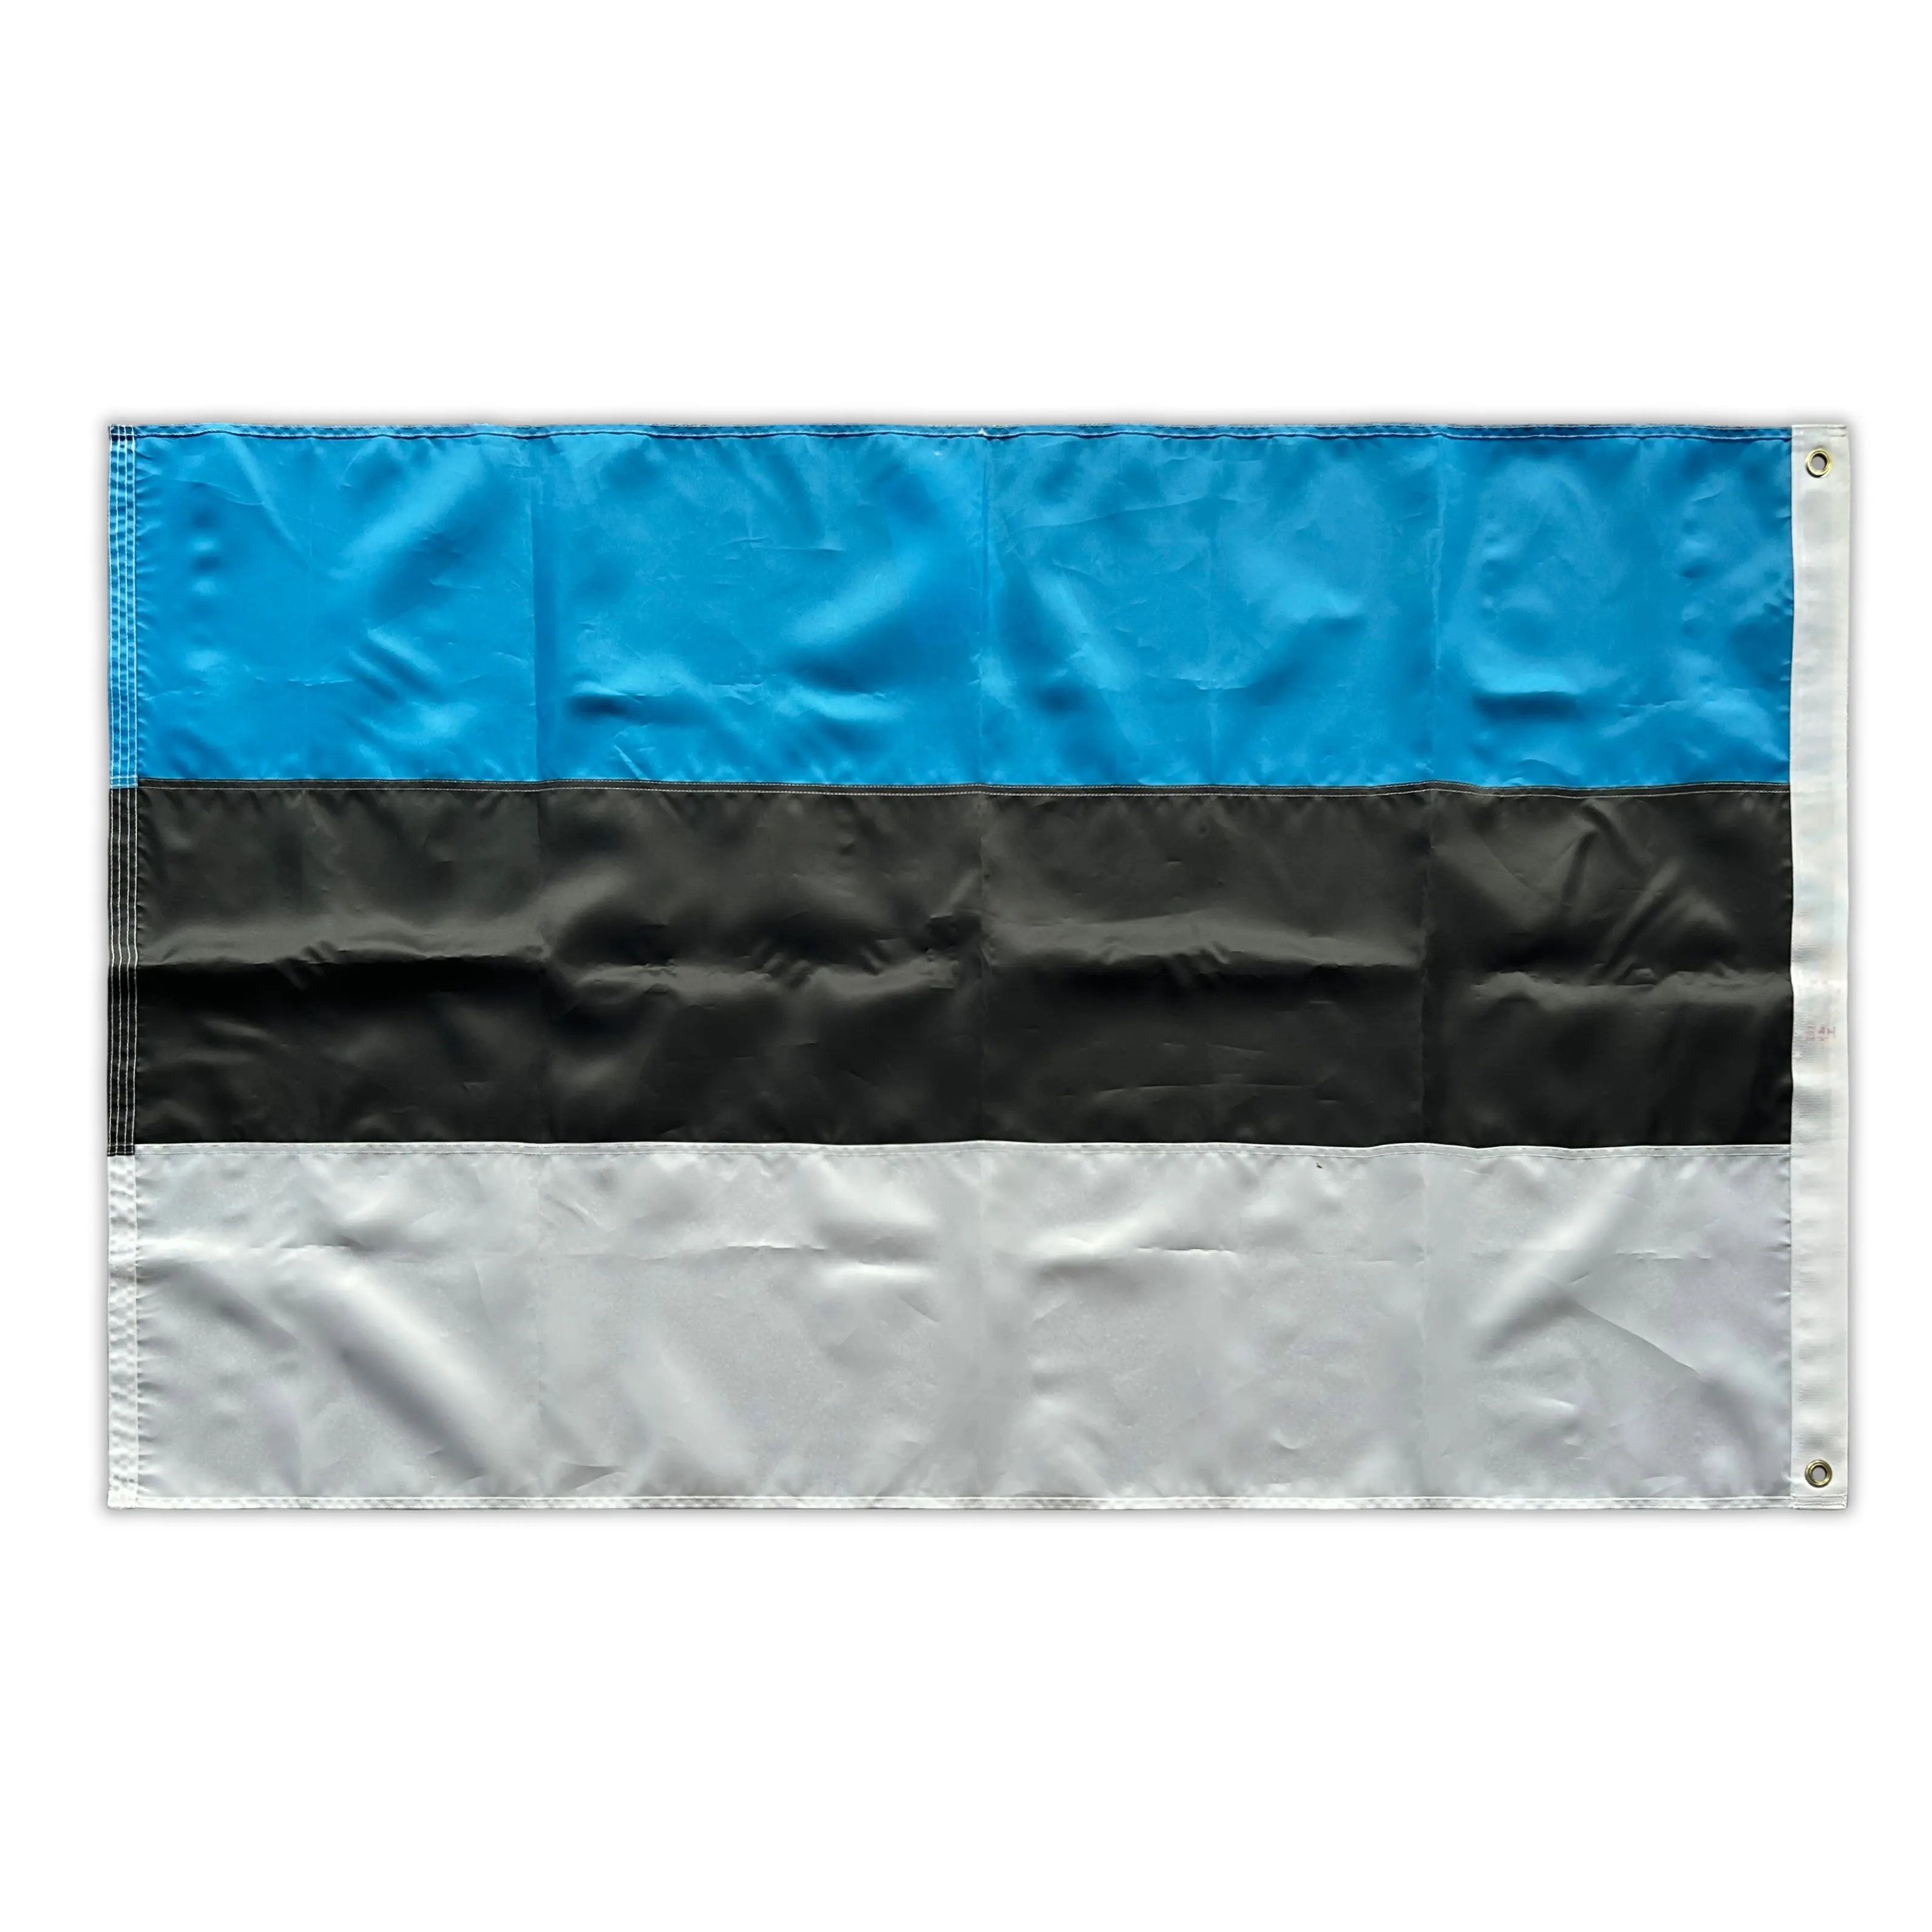 Syal bendera high Print kelulusan Sash Estonia untuk Aksesori pesta dewasa luar negeri belajar Internasional